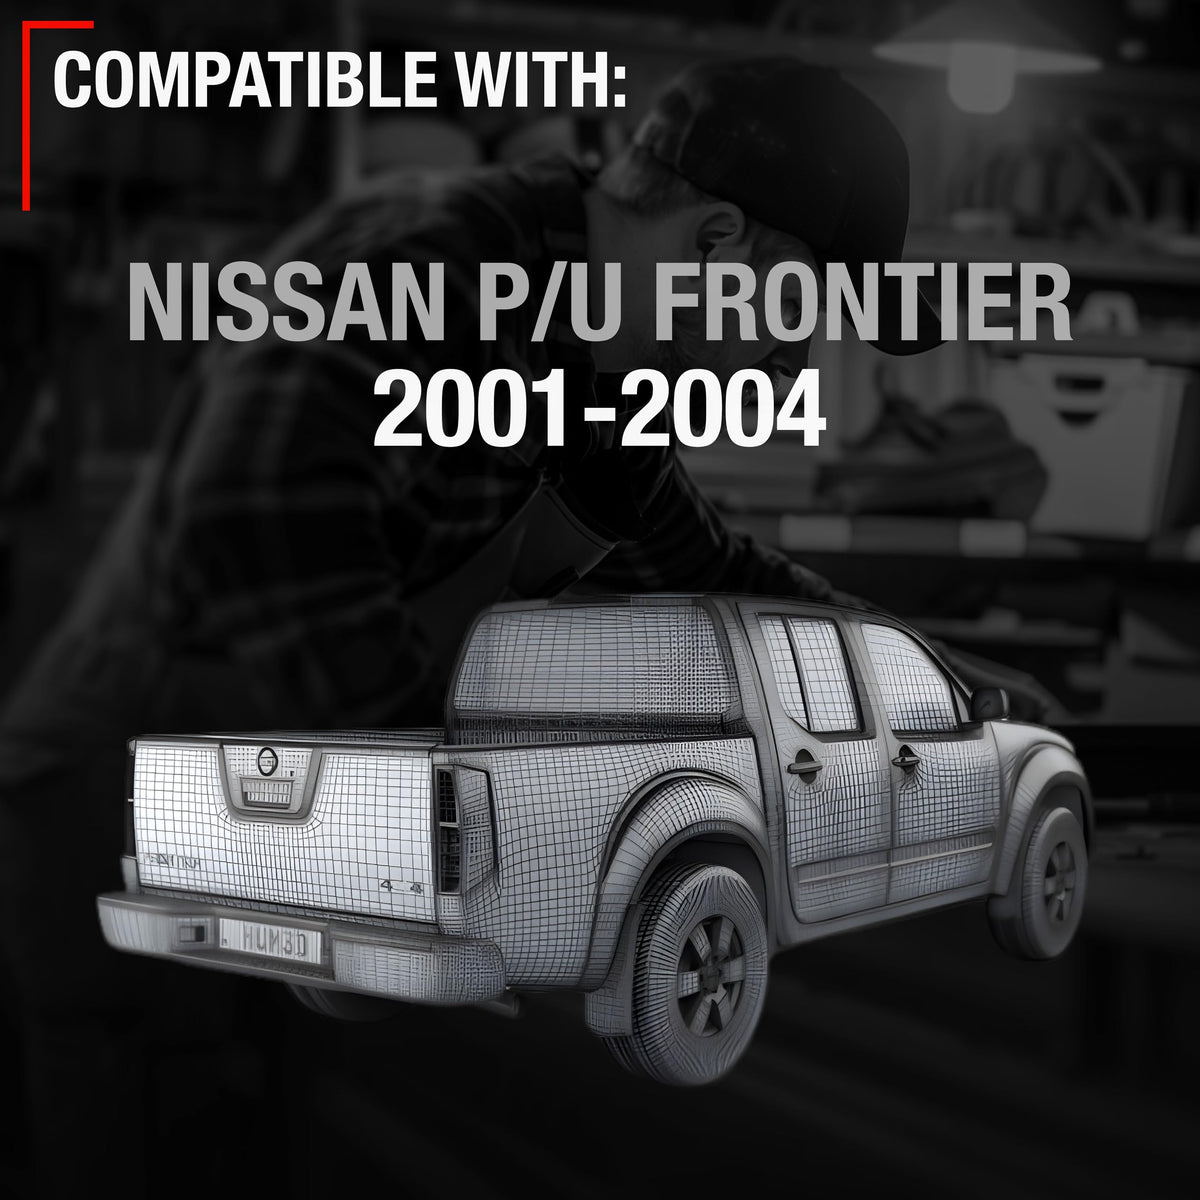 TRUBUILT1 AUTOMOTIVE Tailgate Handle Assembly - Compatible with 2001-2004 Nissan Frontier Pick Up - Texture Black - Plastic, Metal - OEM 90606-8Z400, 90606-9Z400, 81575